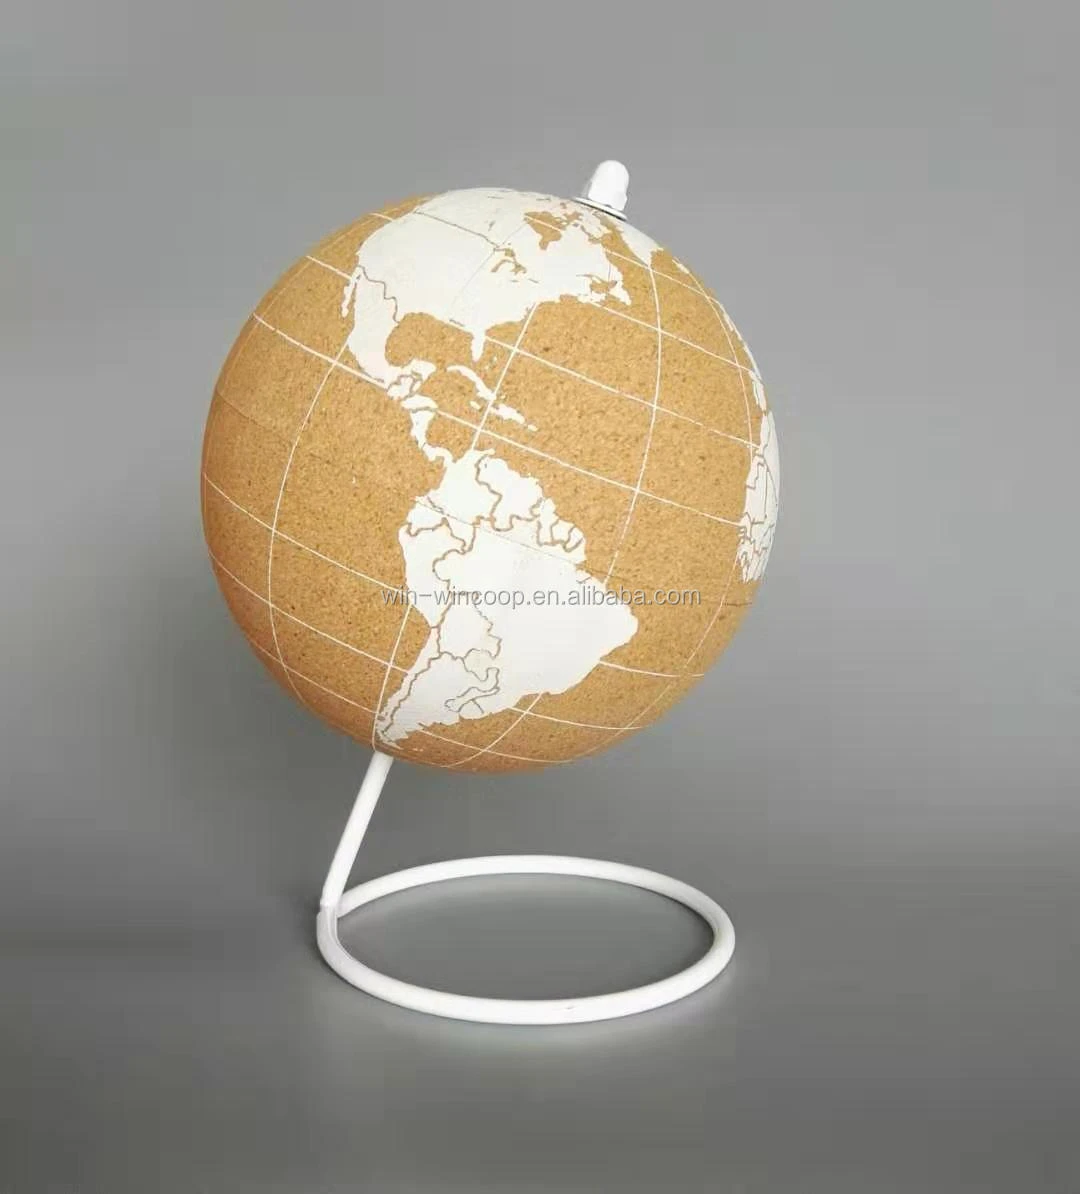 10 Inches Desktop World Globe cork material rotating with 50pcs push pins white land printing